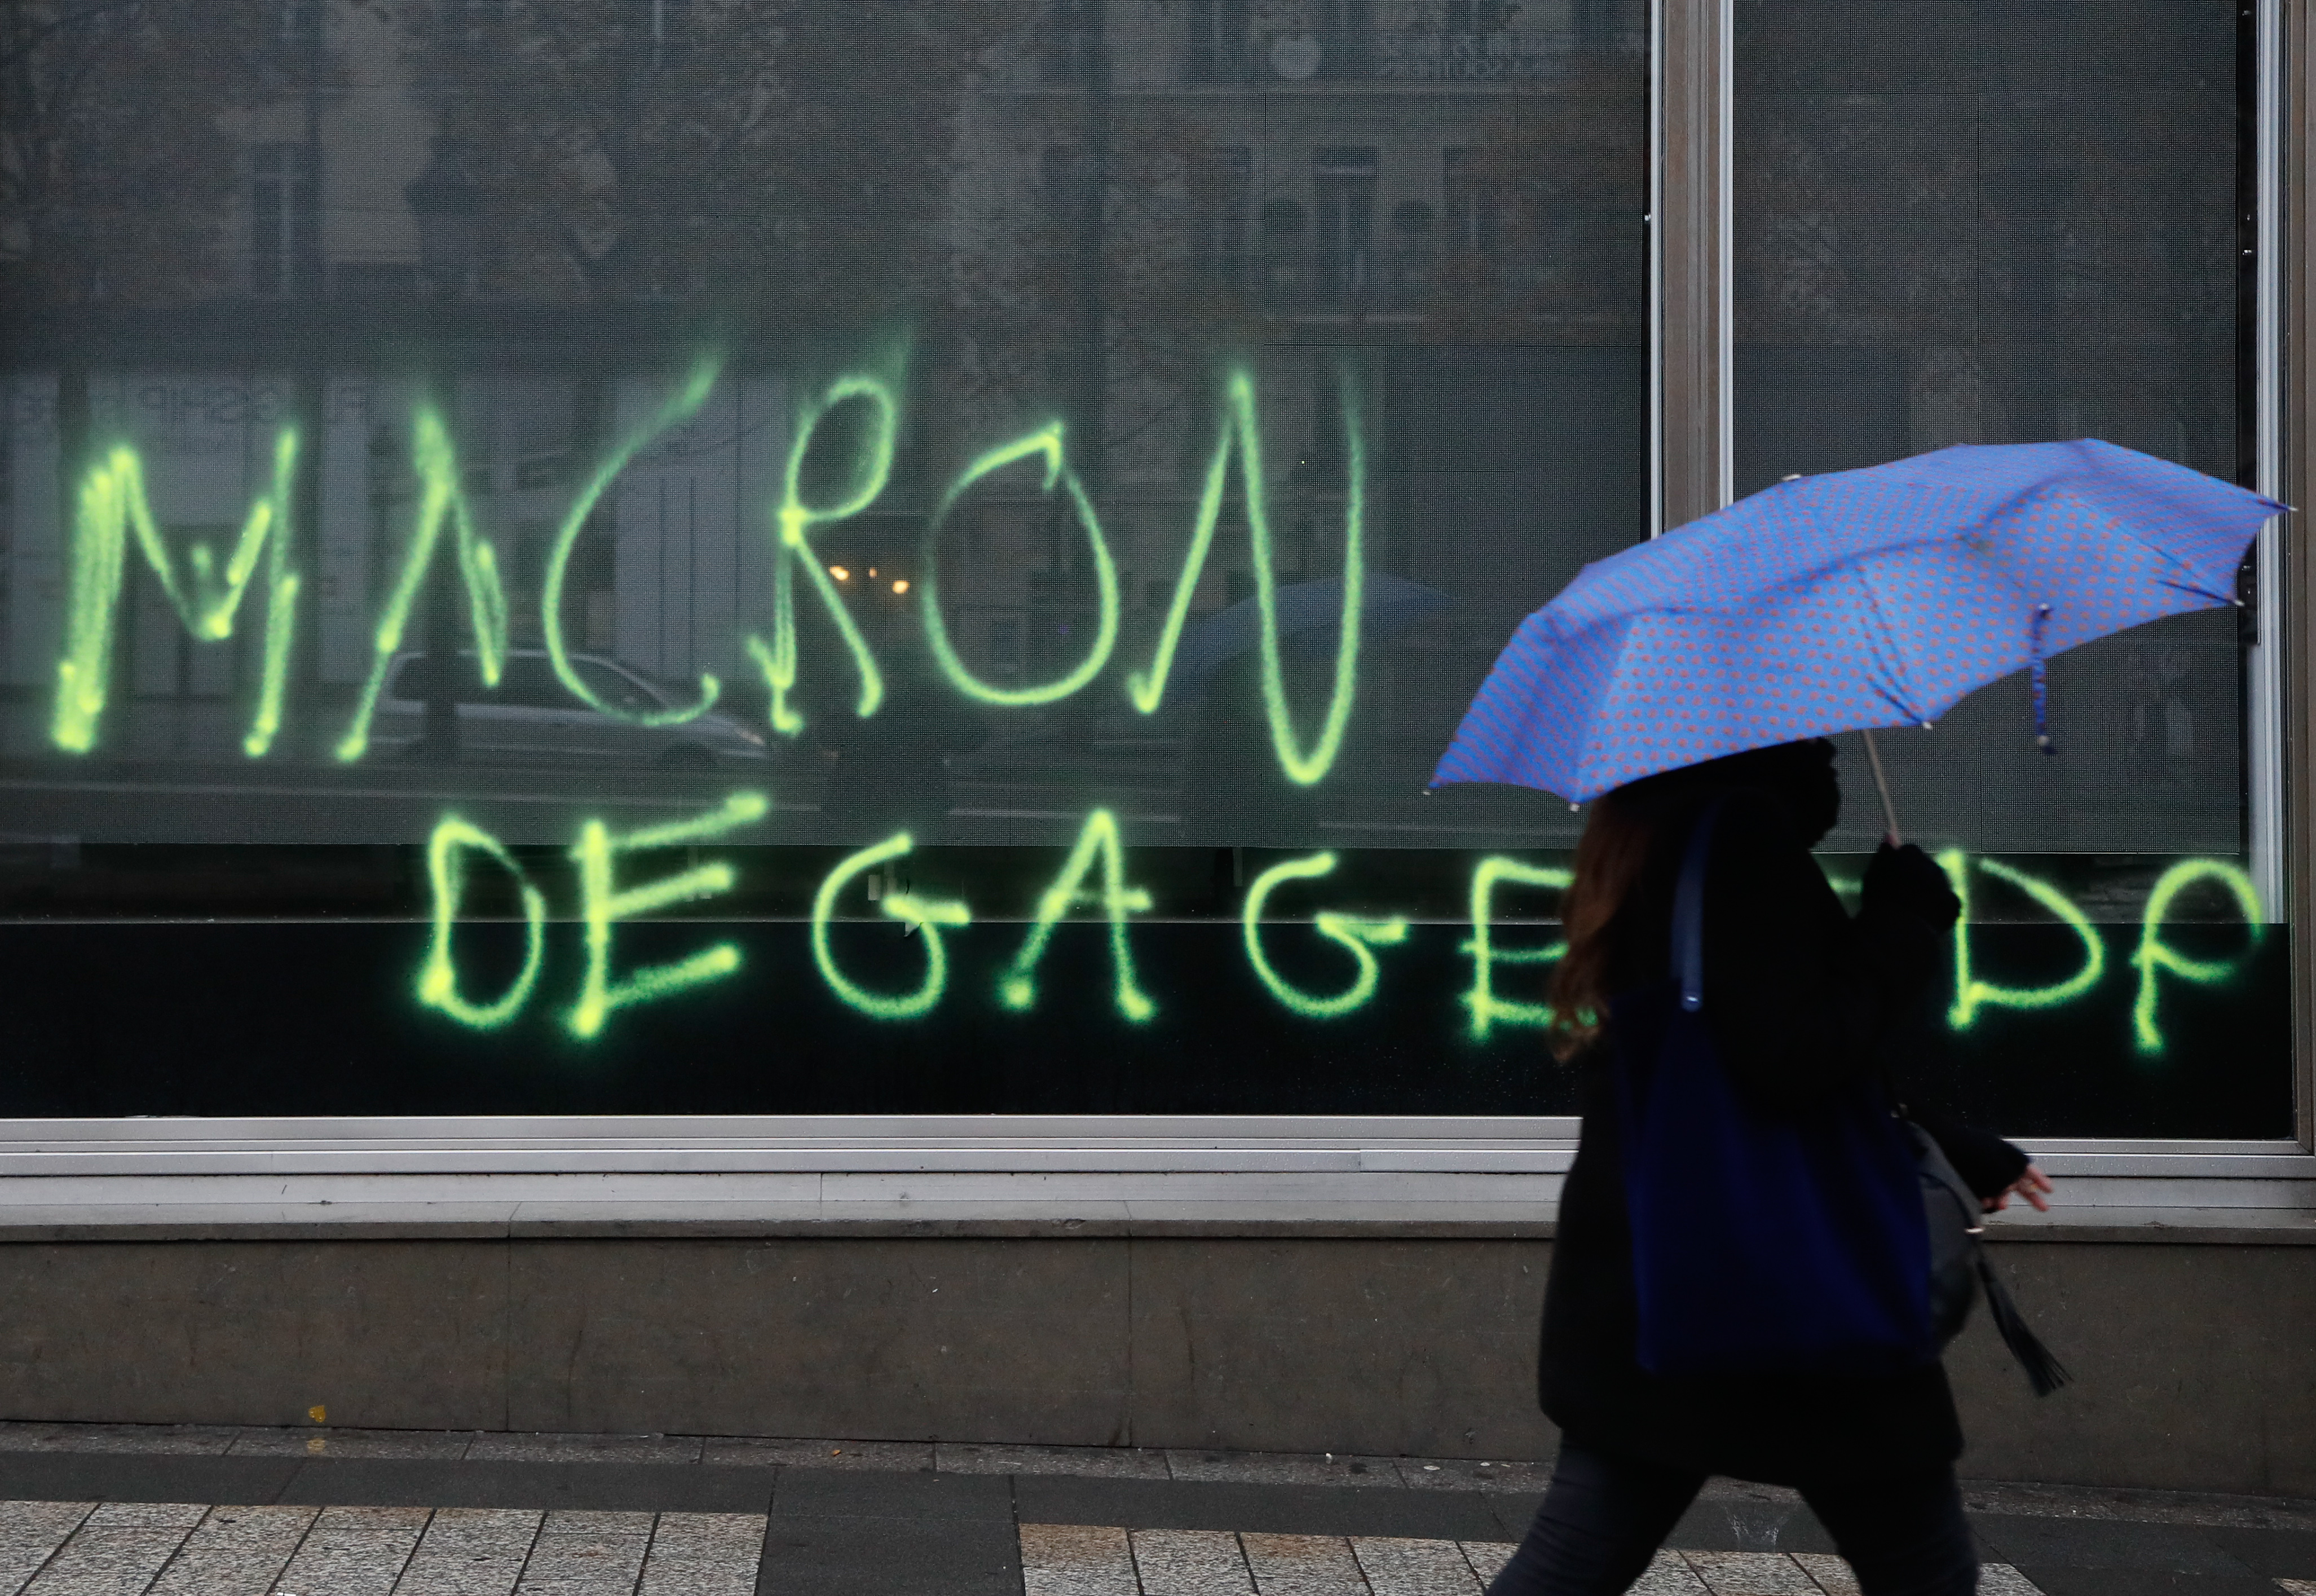 Escrito de manifestantes: "Macron renuncia" | Agence France-Presse